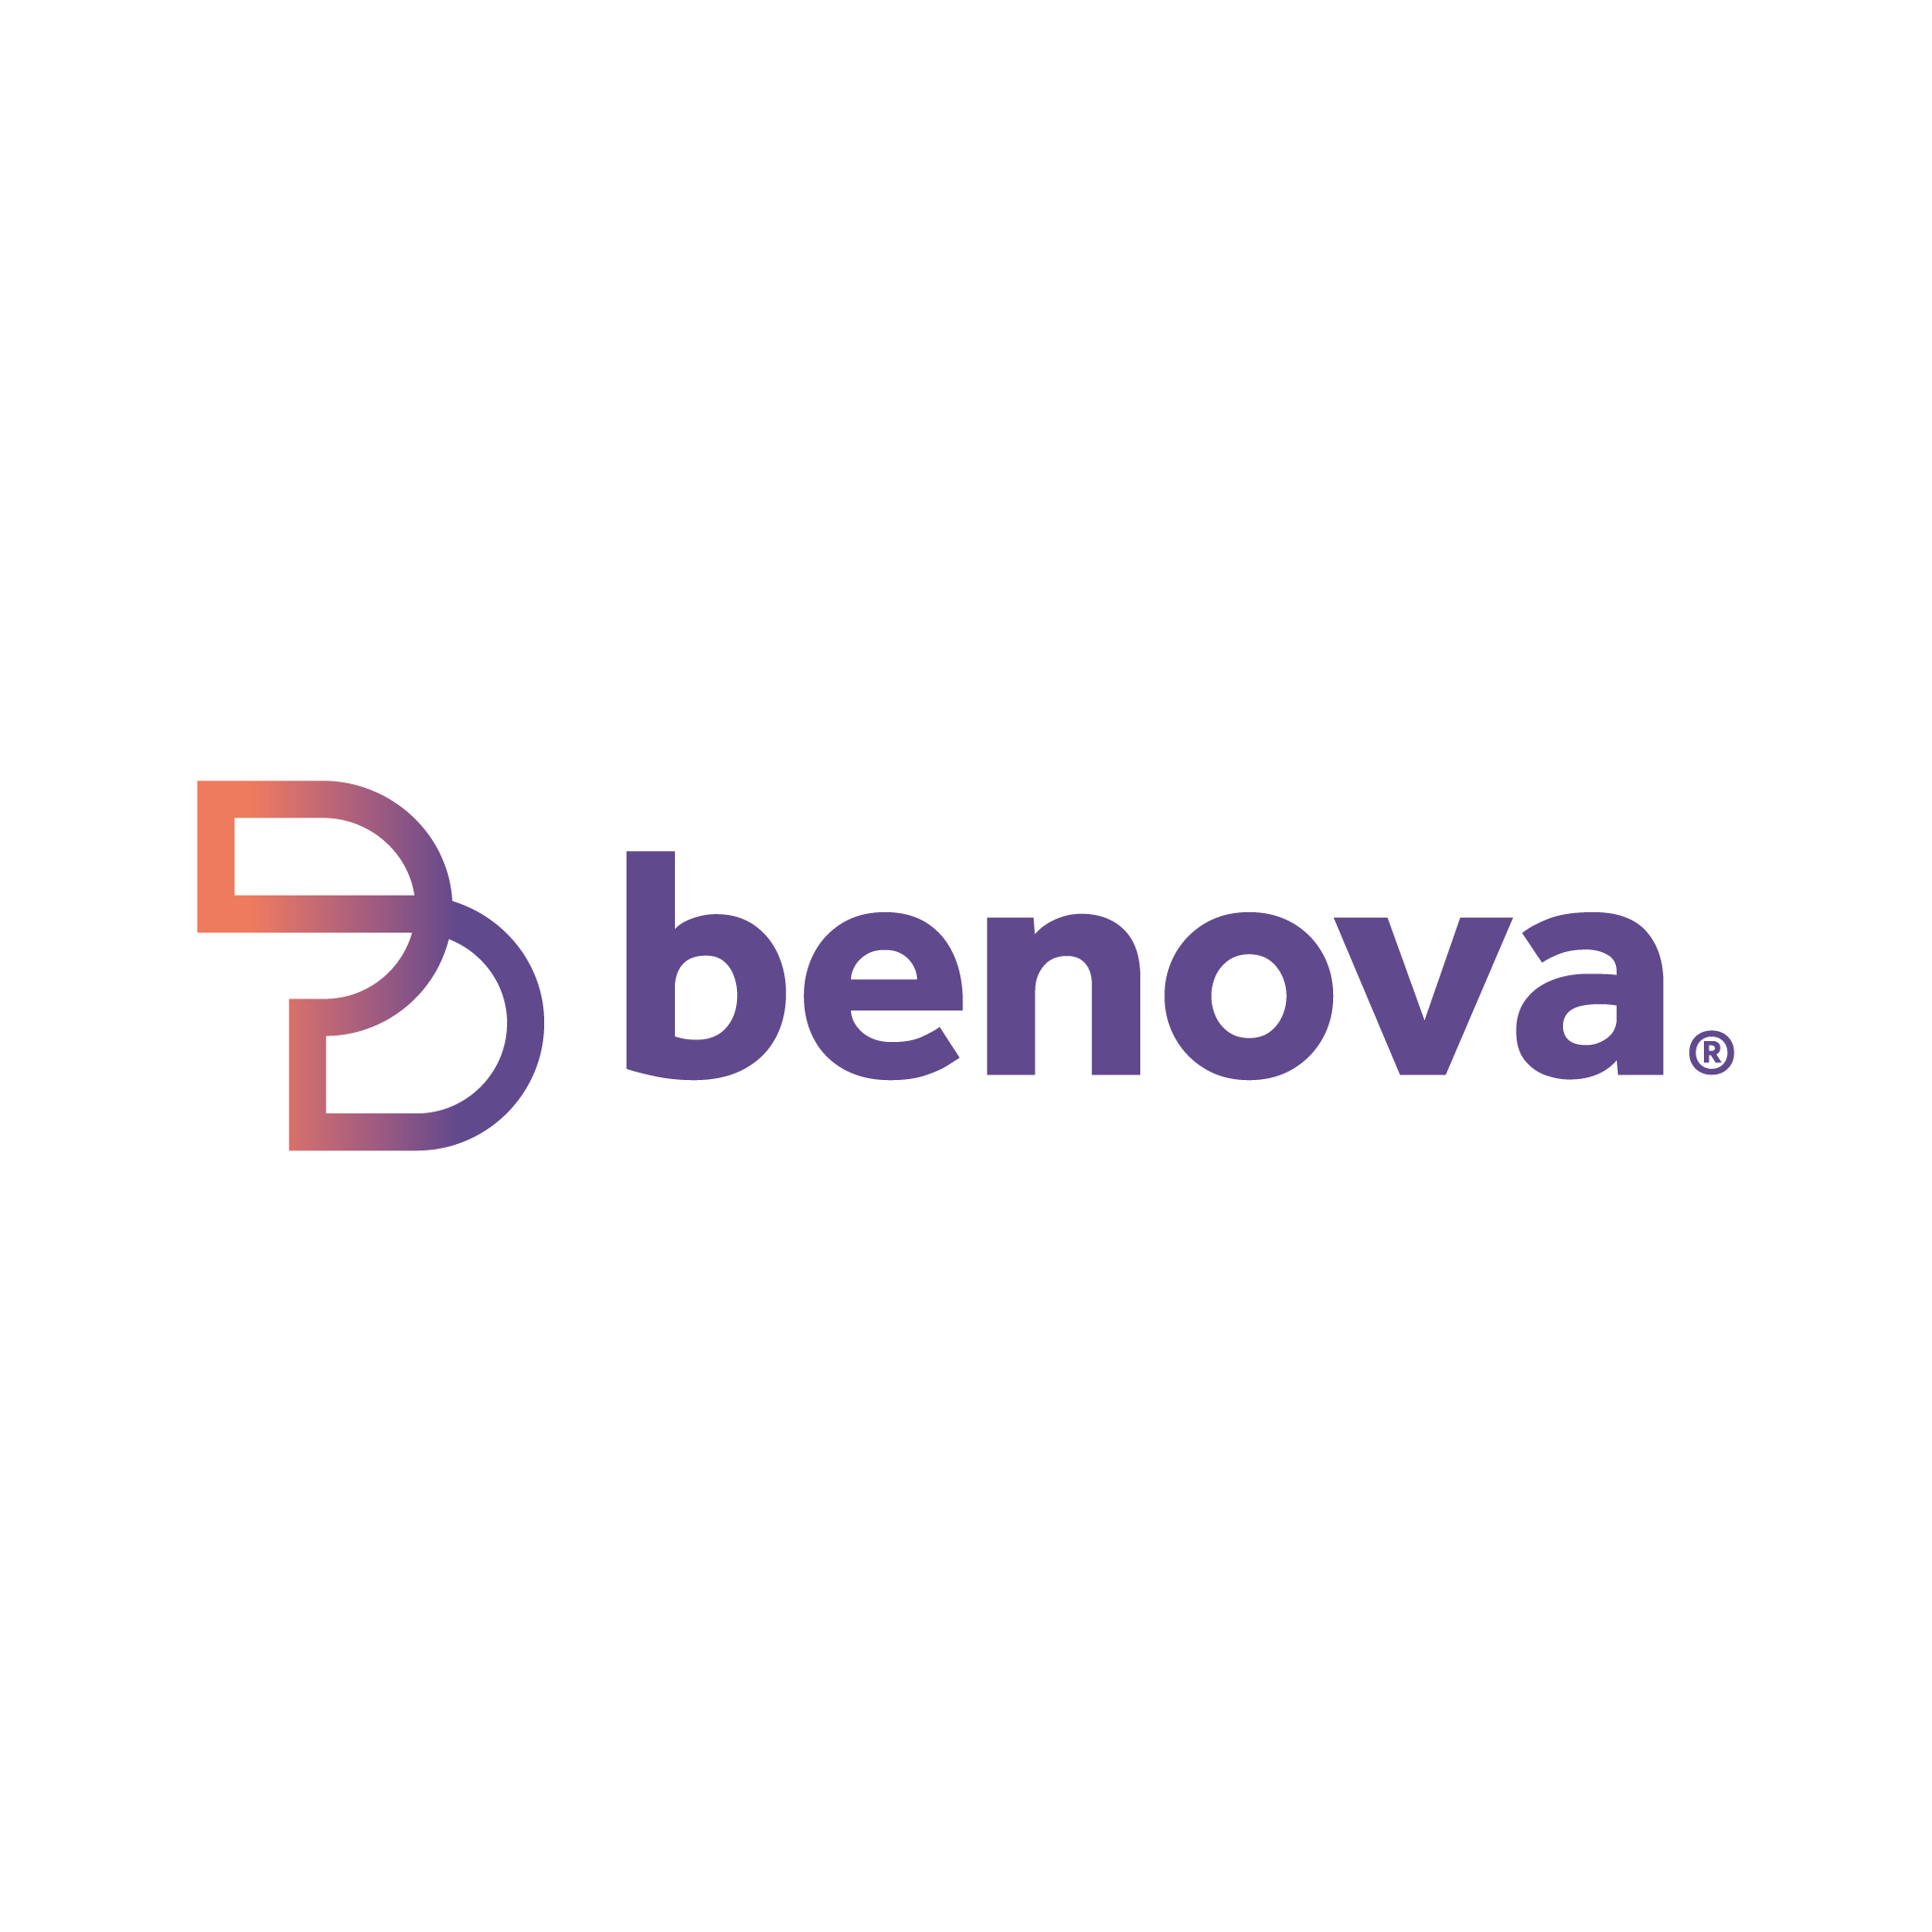 Benova